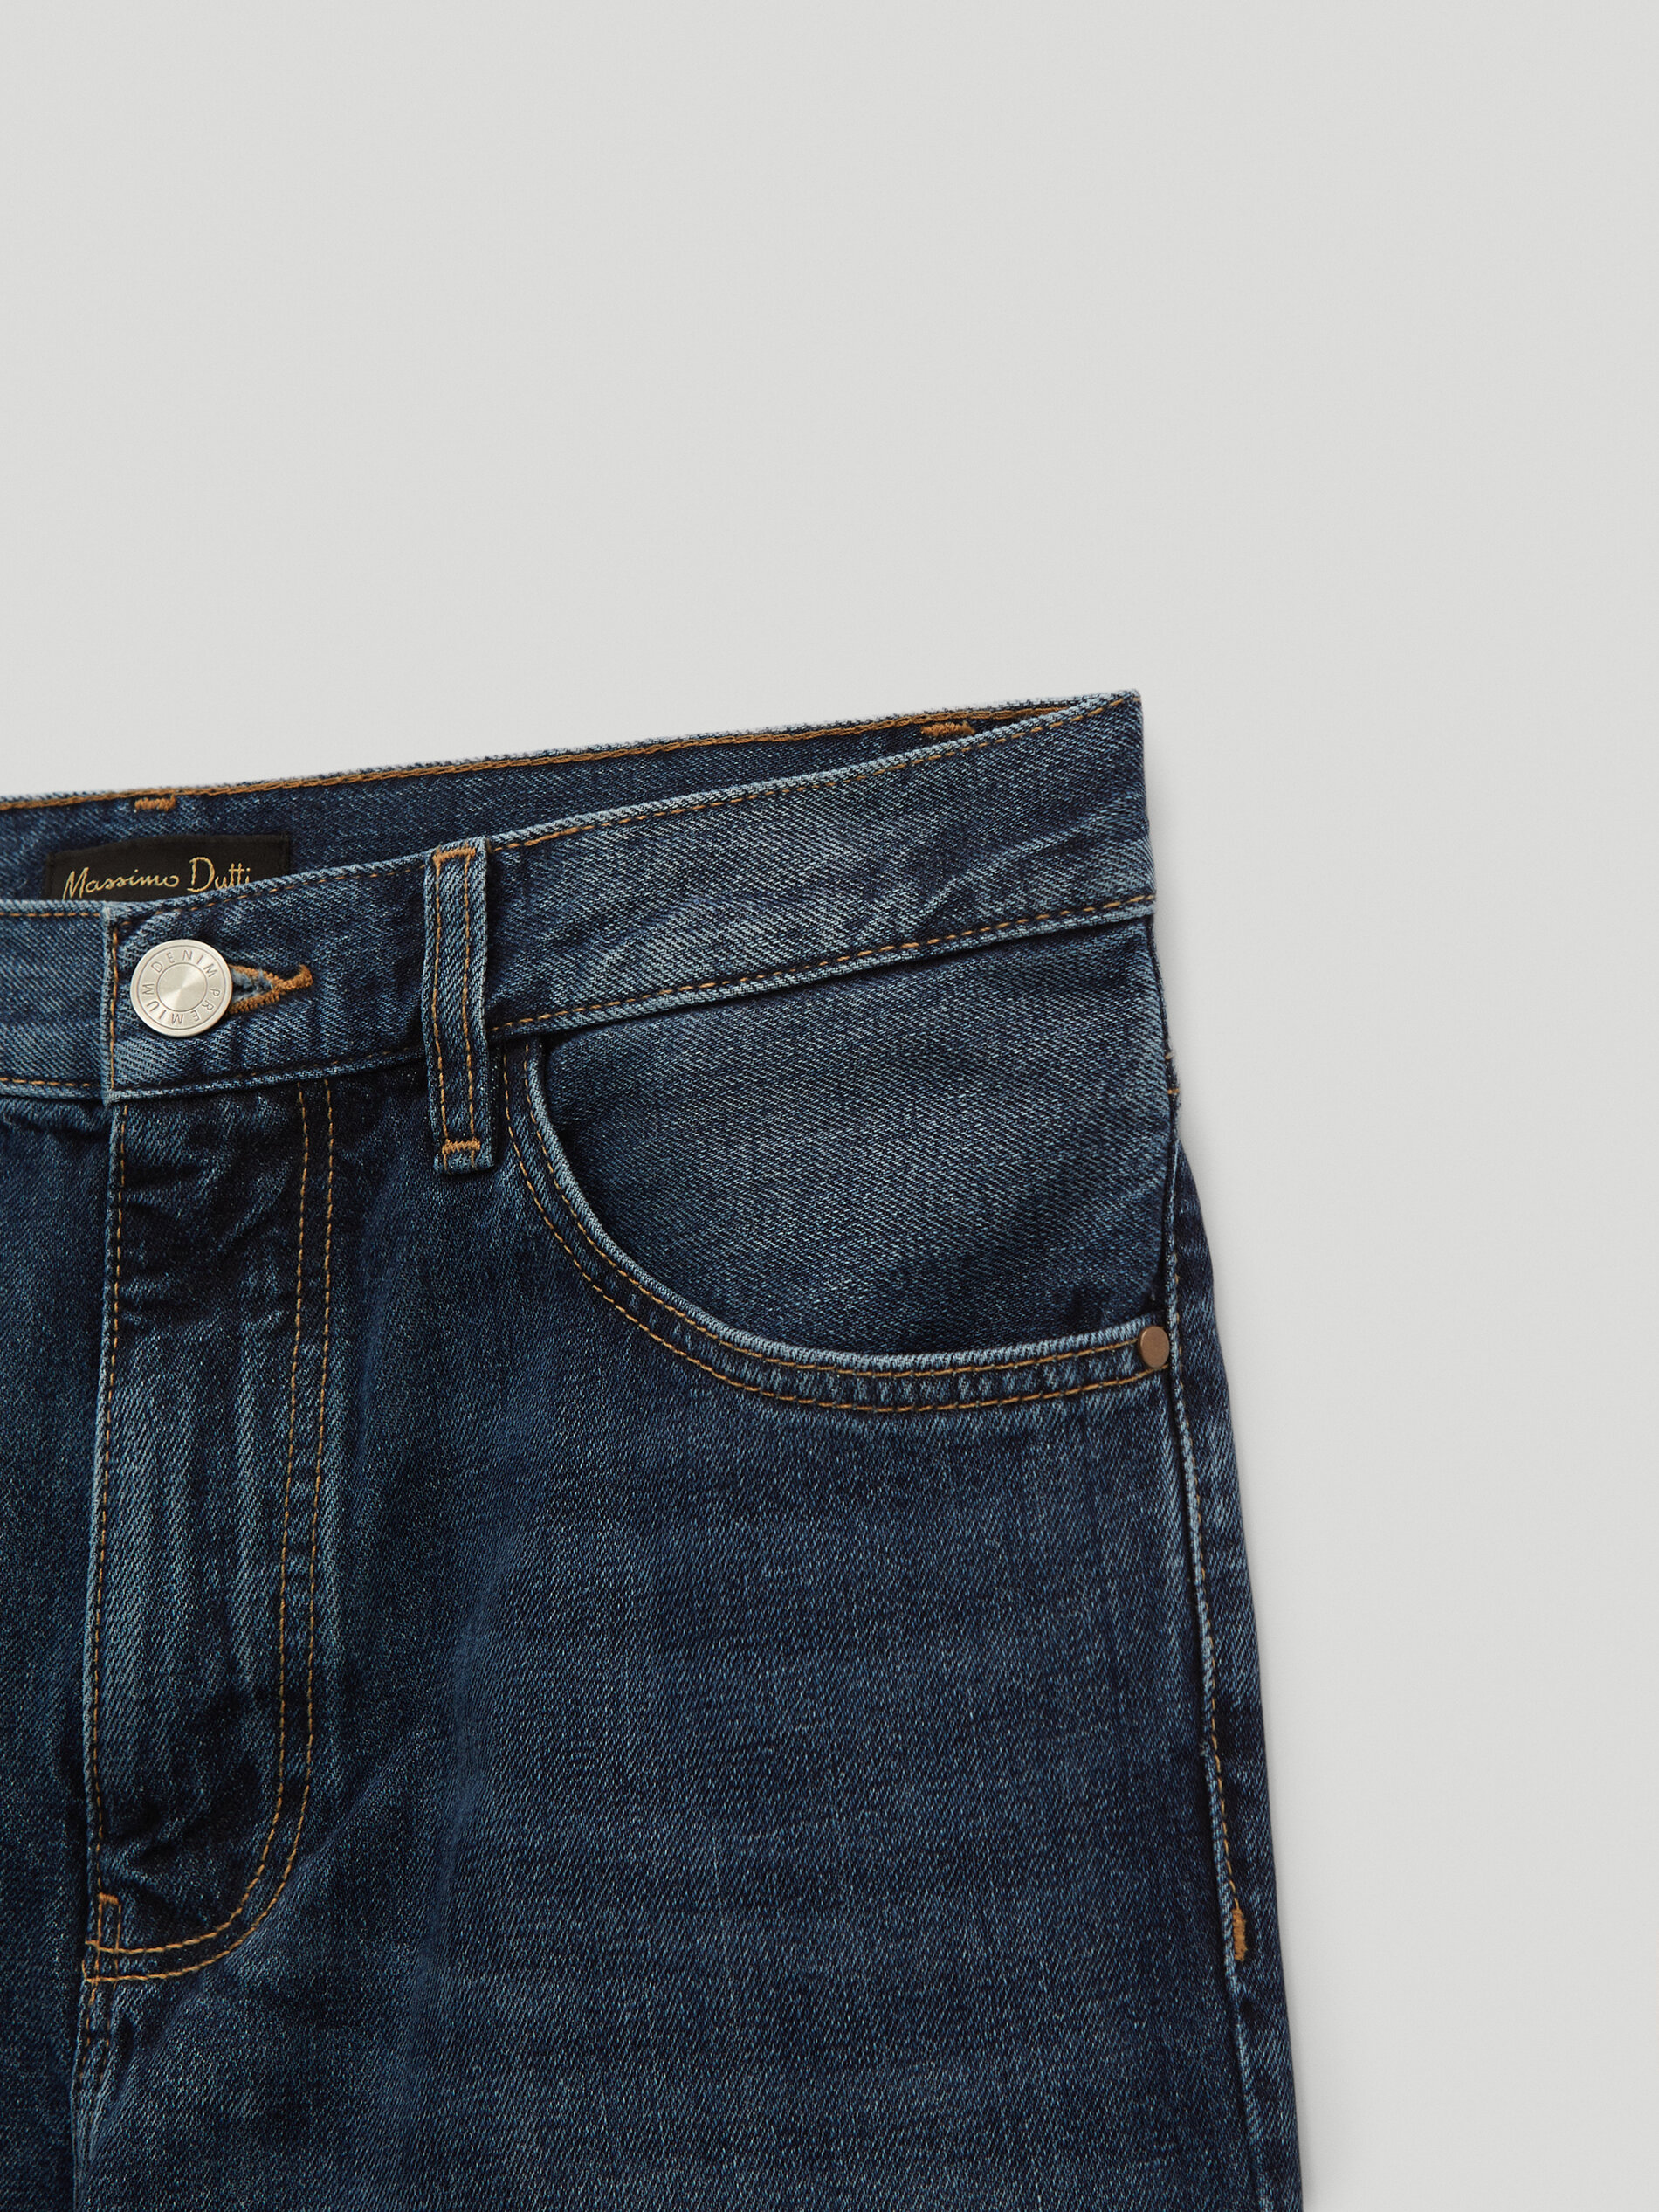 Massimo Dutti Mid-Waist Straight-Fit Jeans - Big Apple Buddy